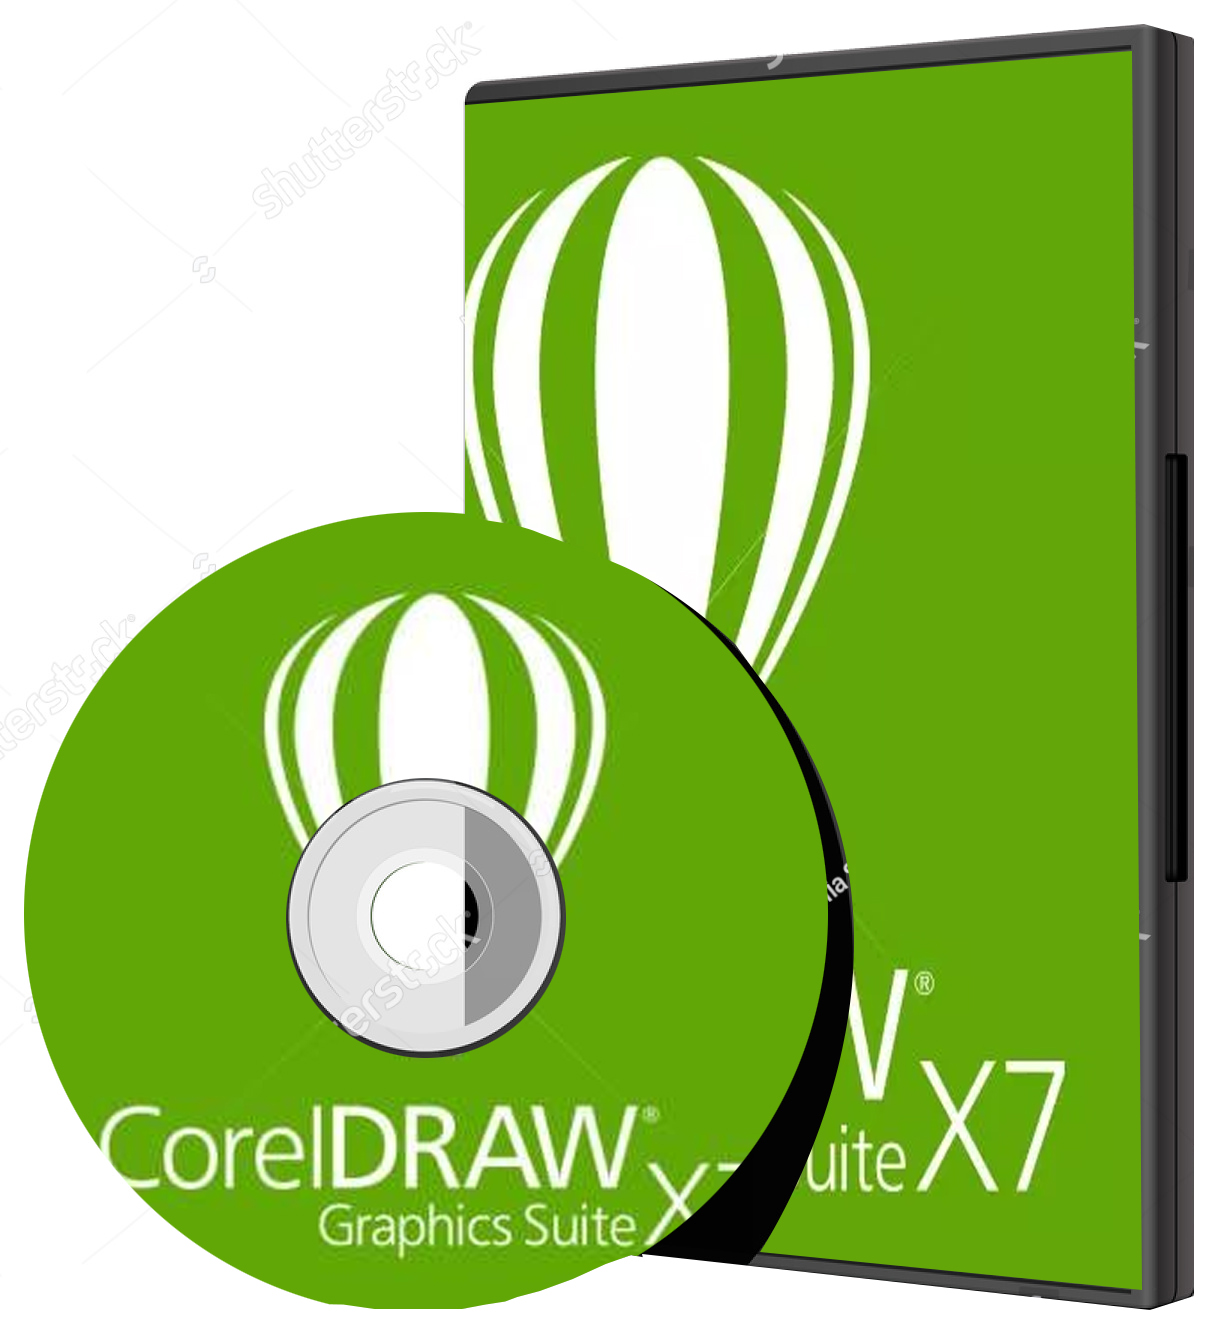 coreldraw 32 bit free download with crack